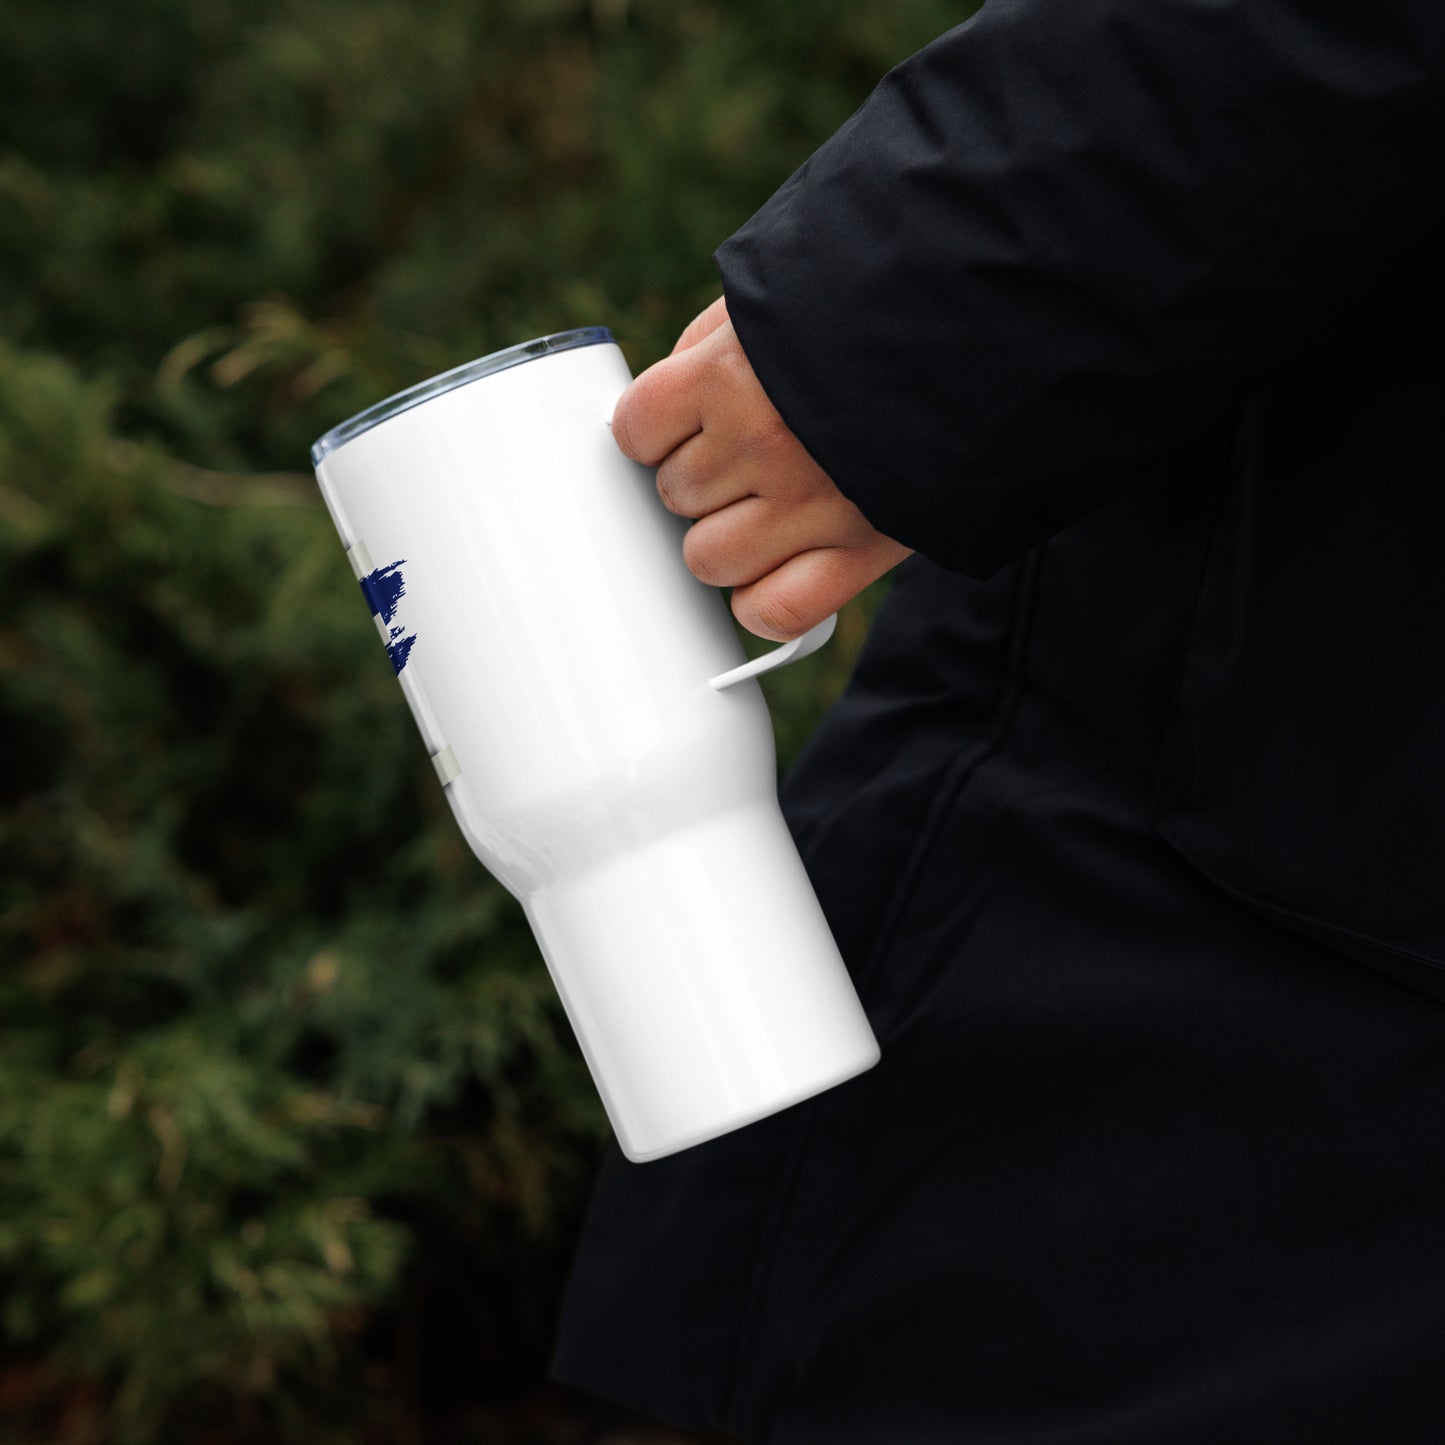 POZE Travel mug with a handle